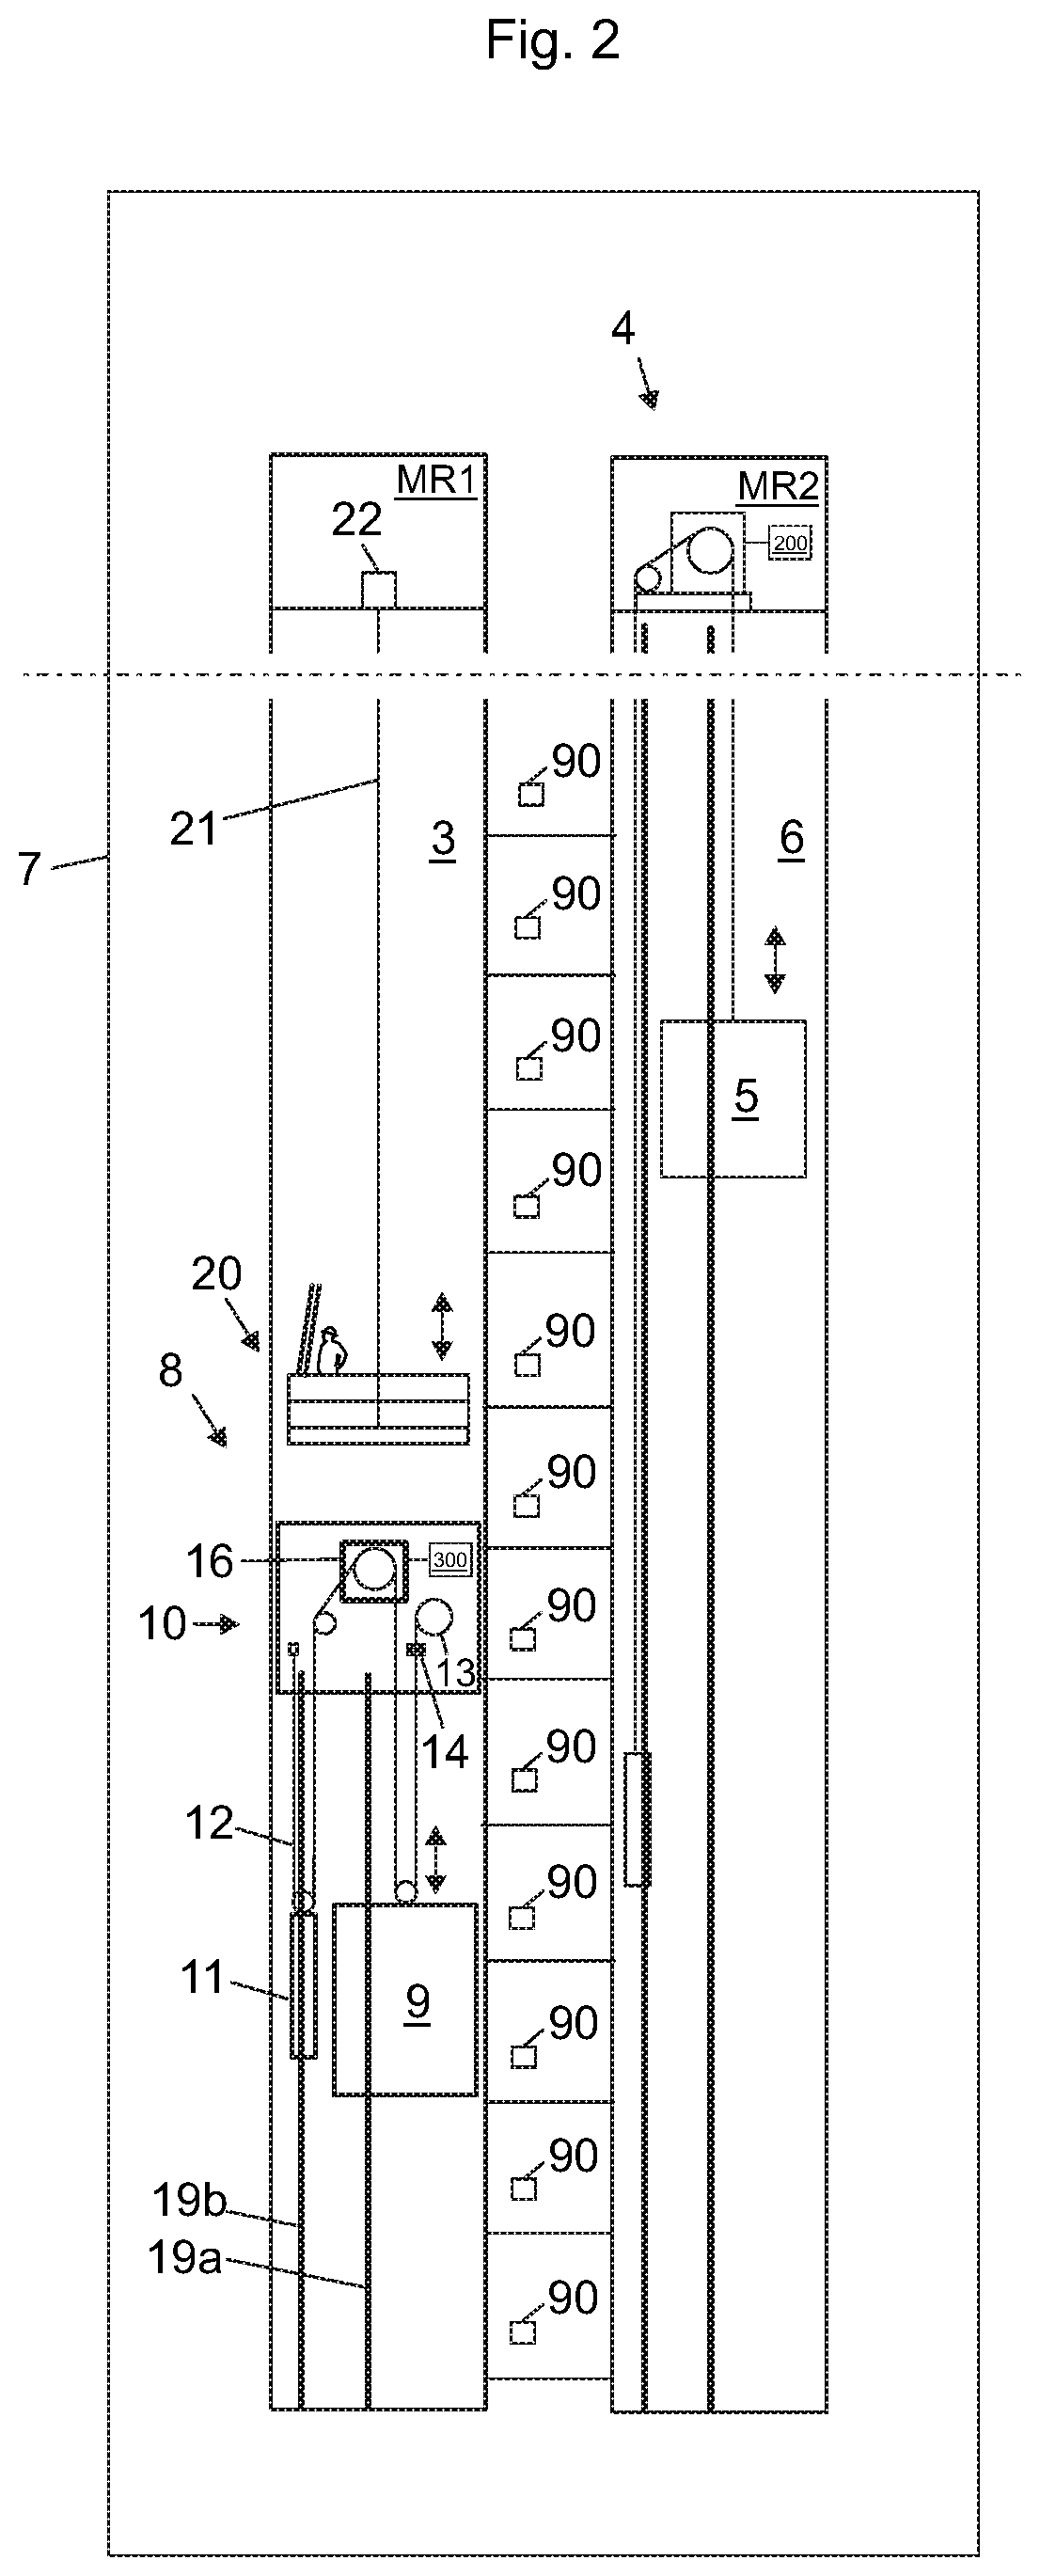 Method for modernizing elevator system